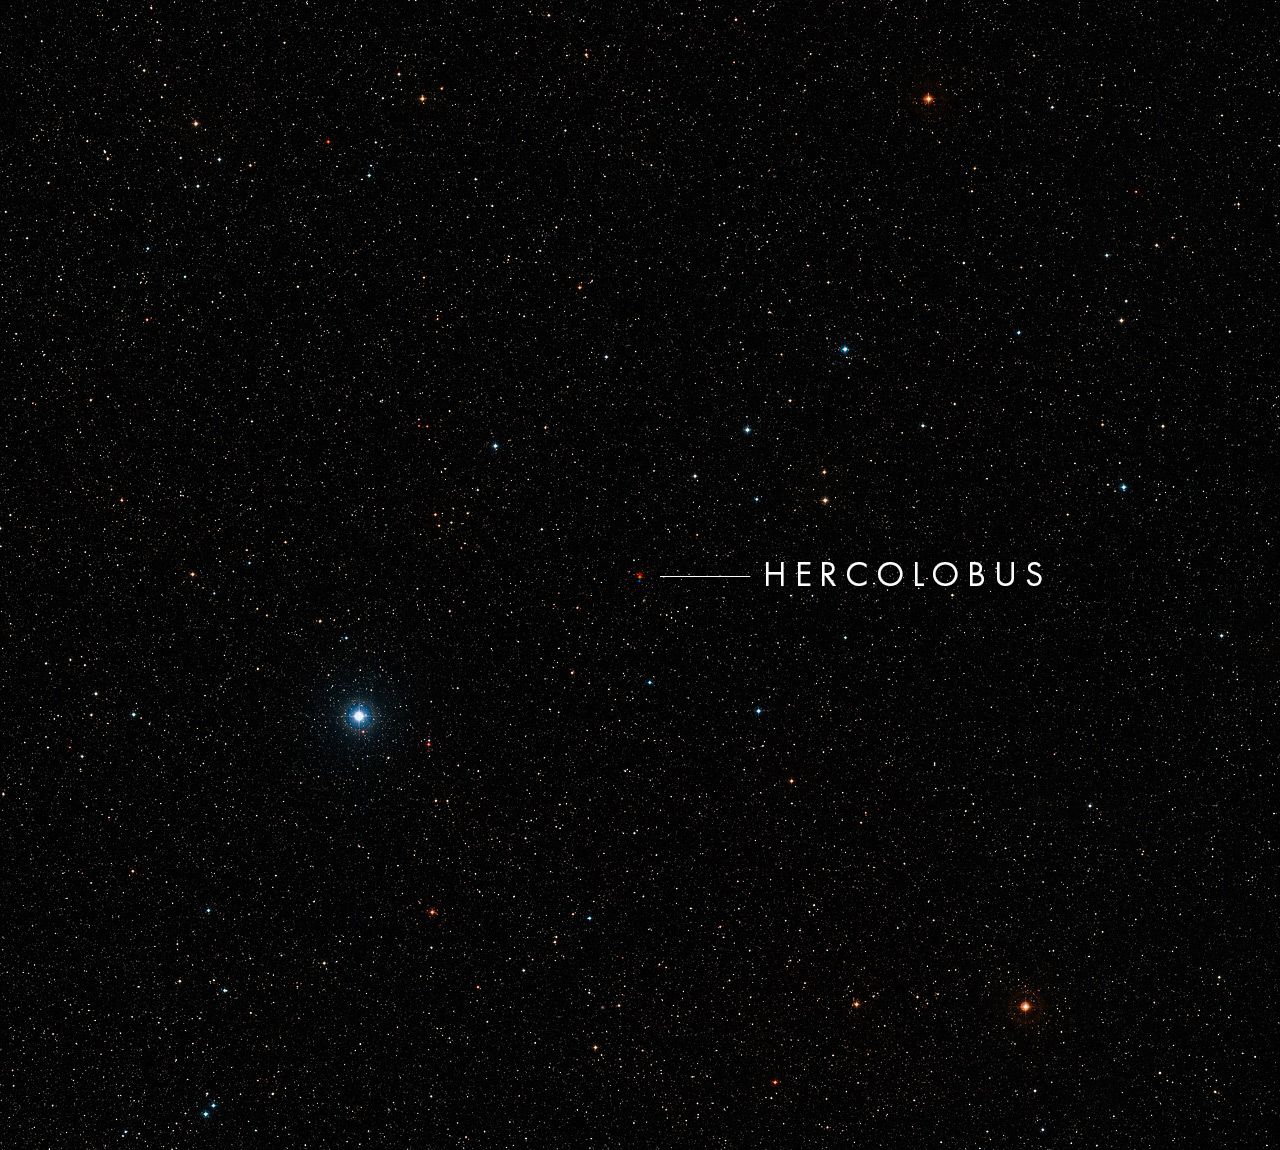 Hercolobus, also called Bernard's Star